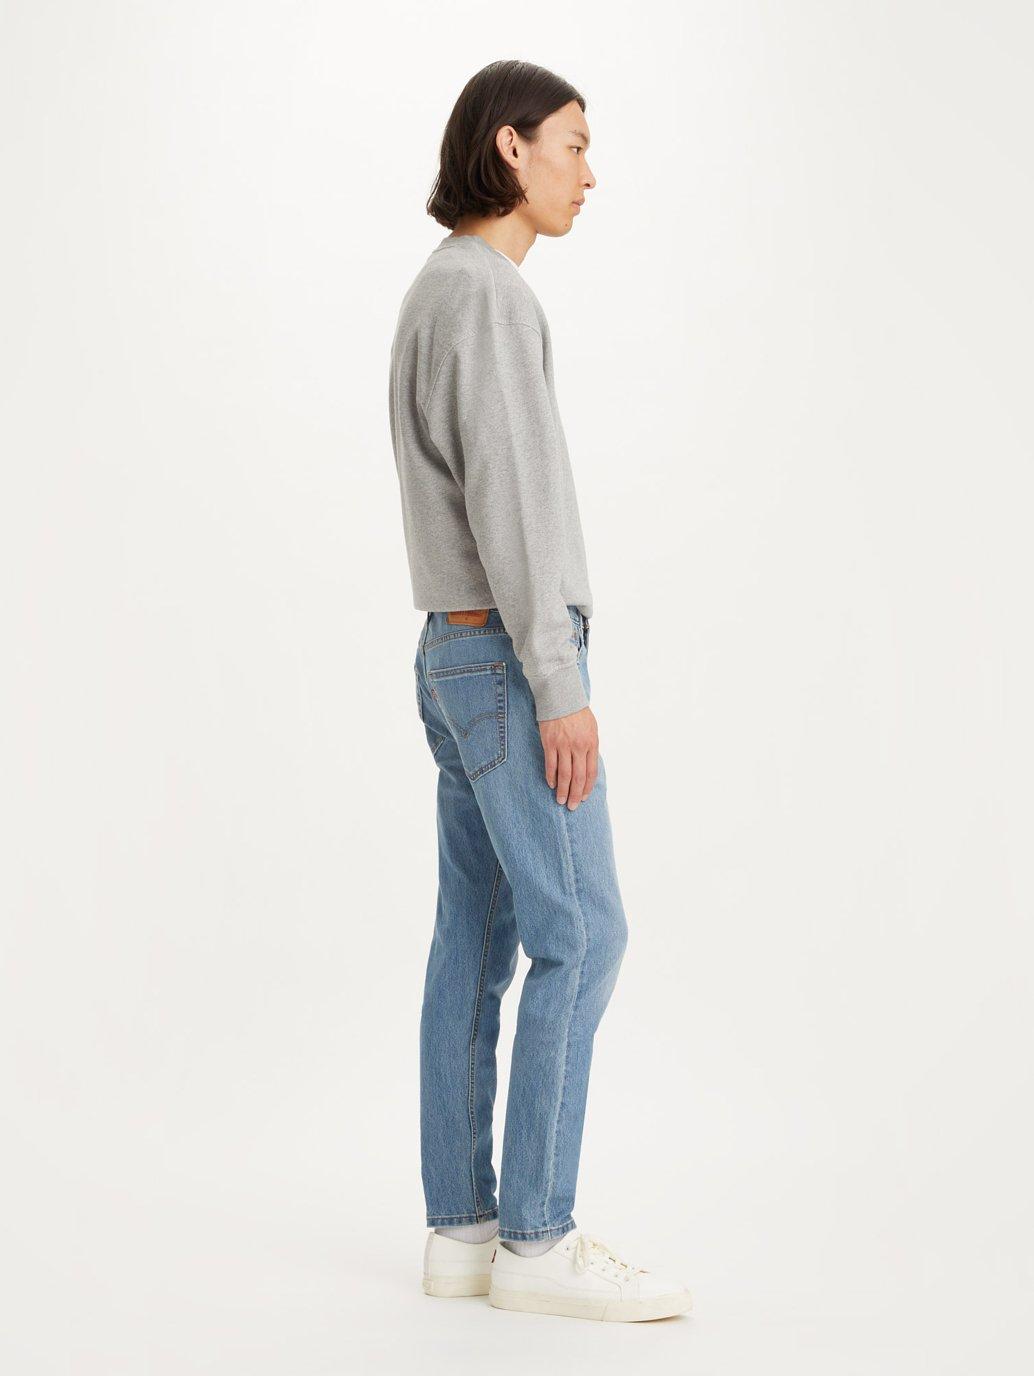 Buy Levi's® Men's 512™ Slim Taper Jeans | Levi’s® Official Online Store MY